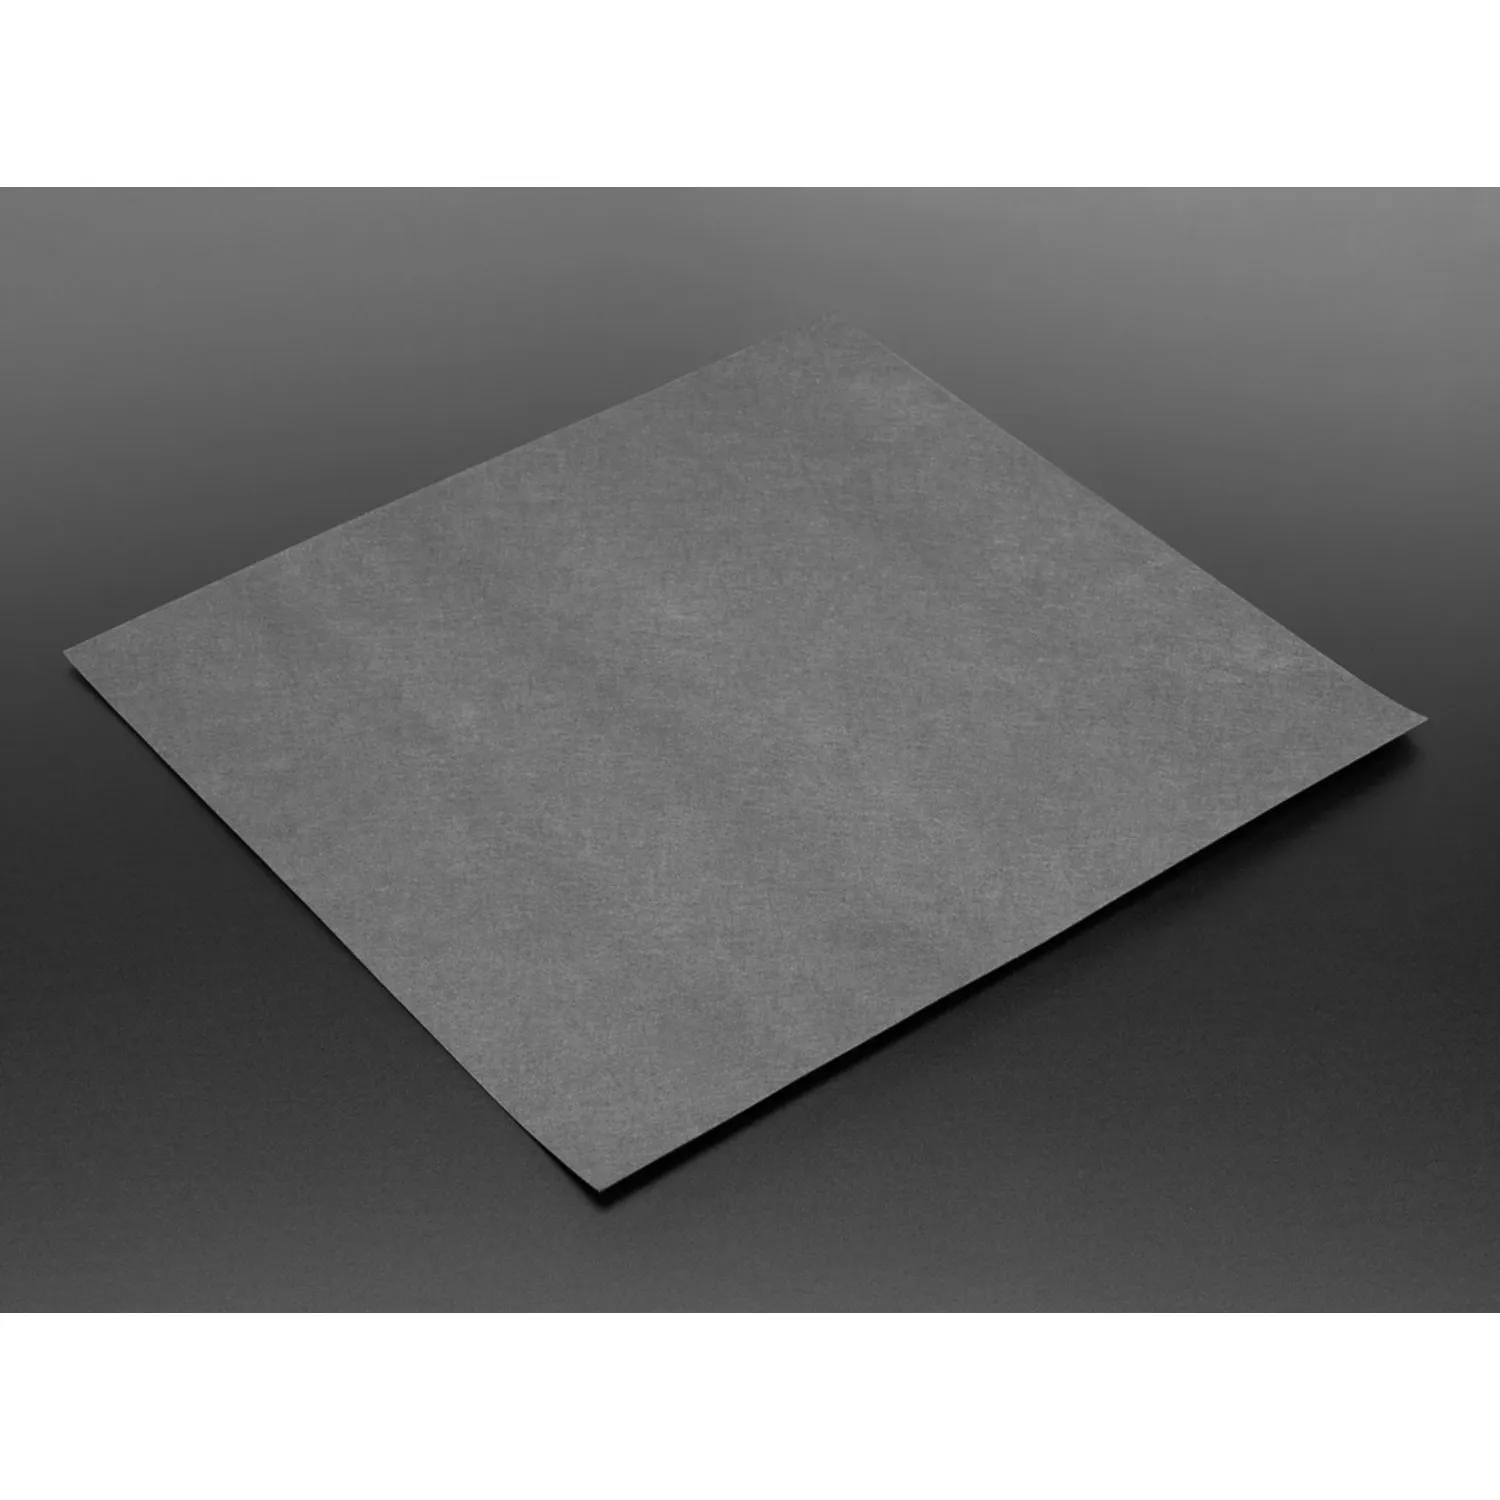 Photo of Eeontex High-Conductivity Heater Fabric - NW170-PI-20